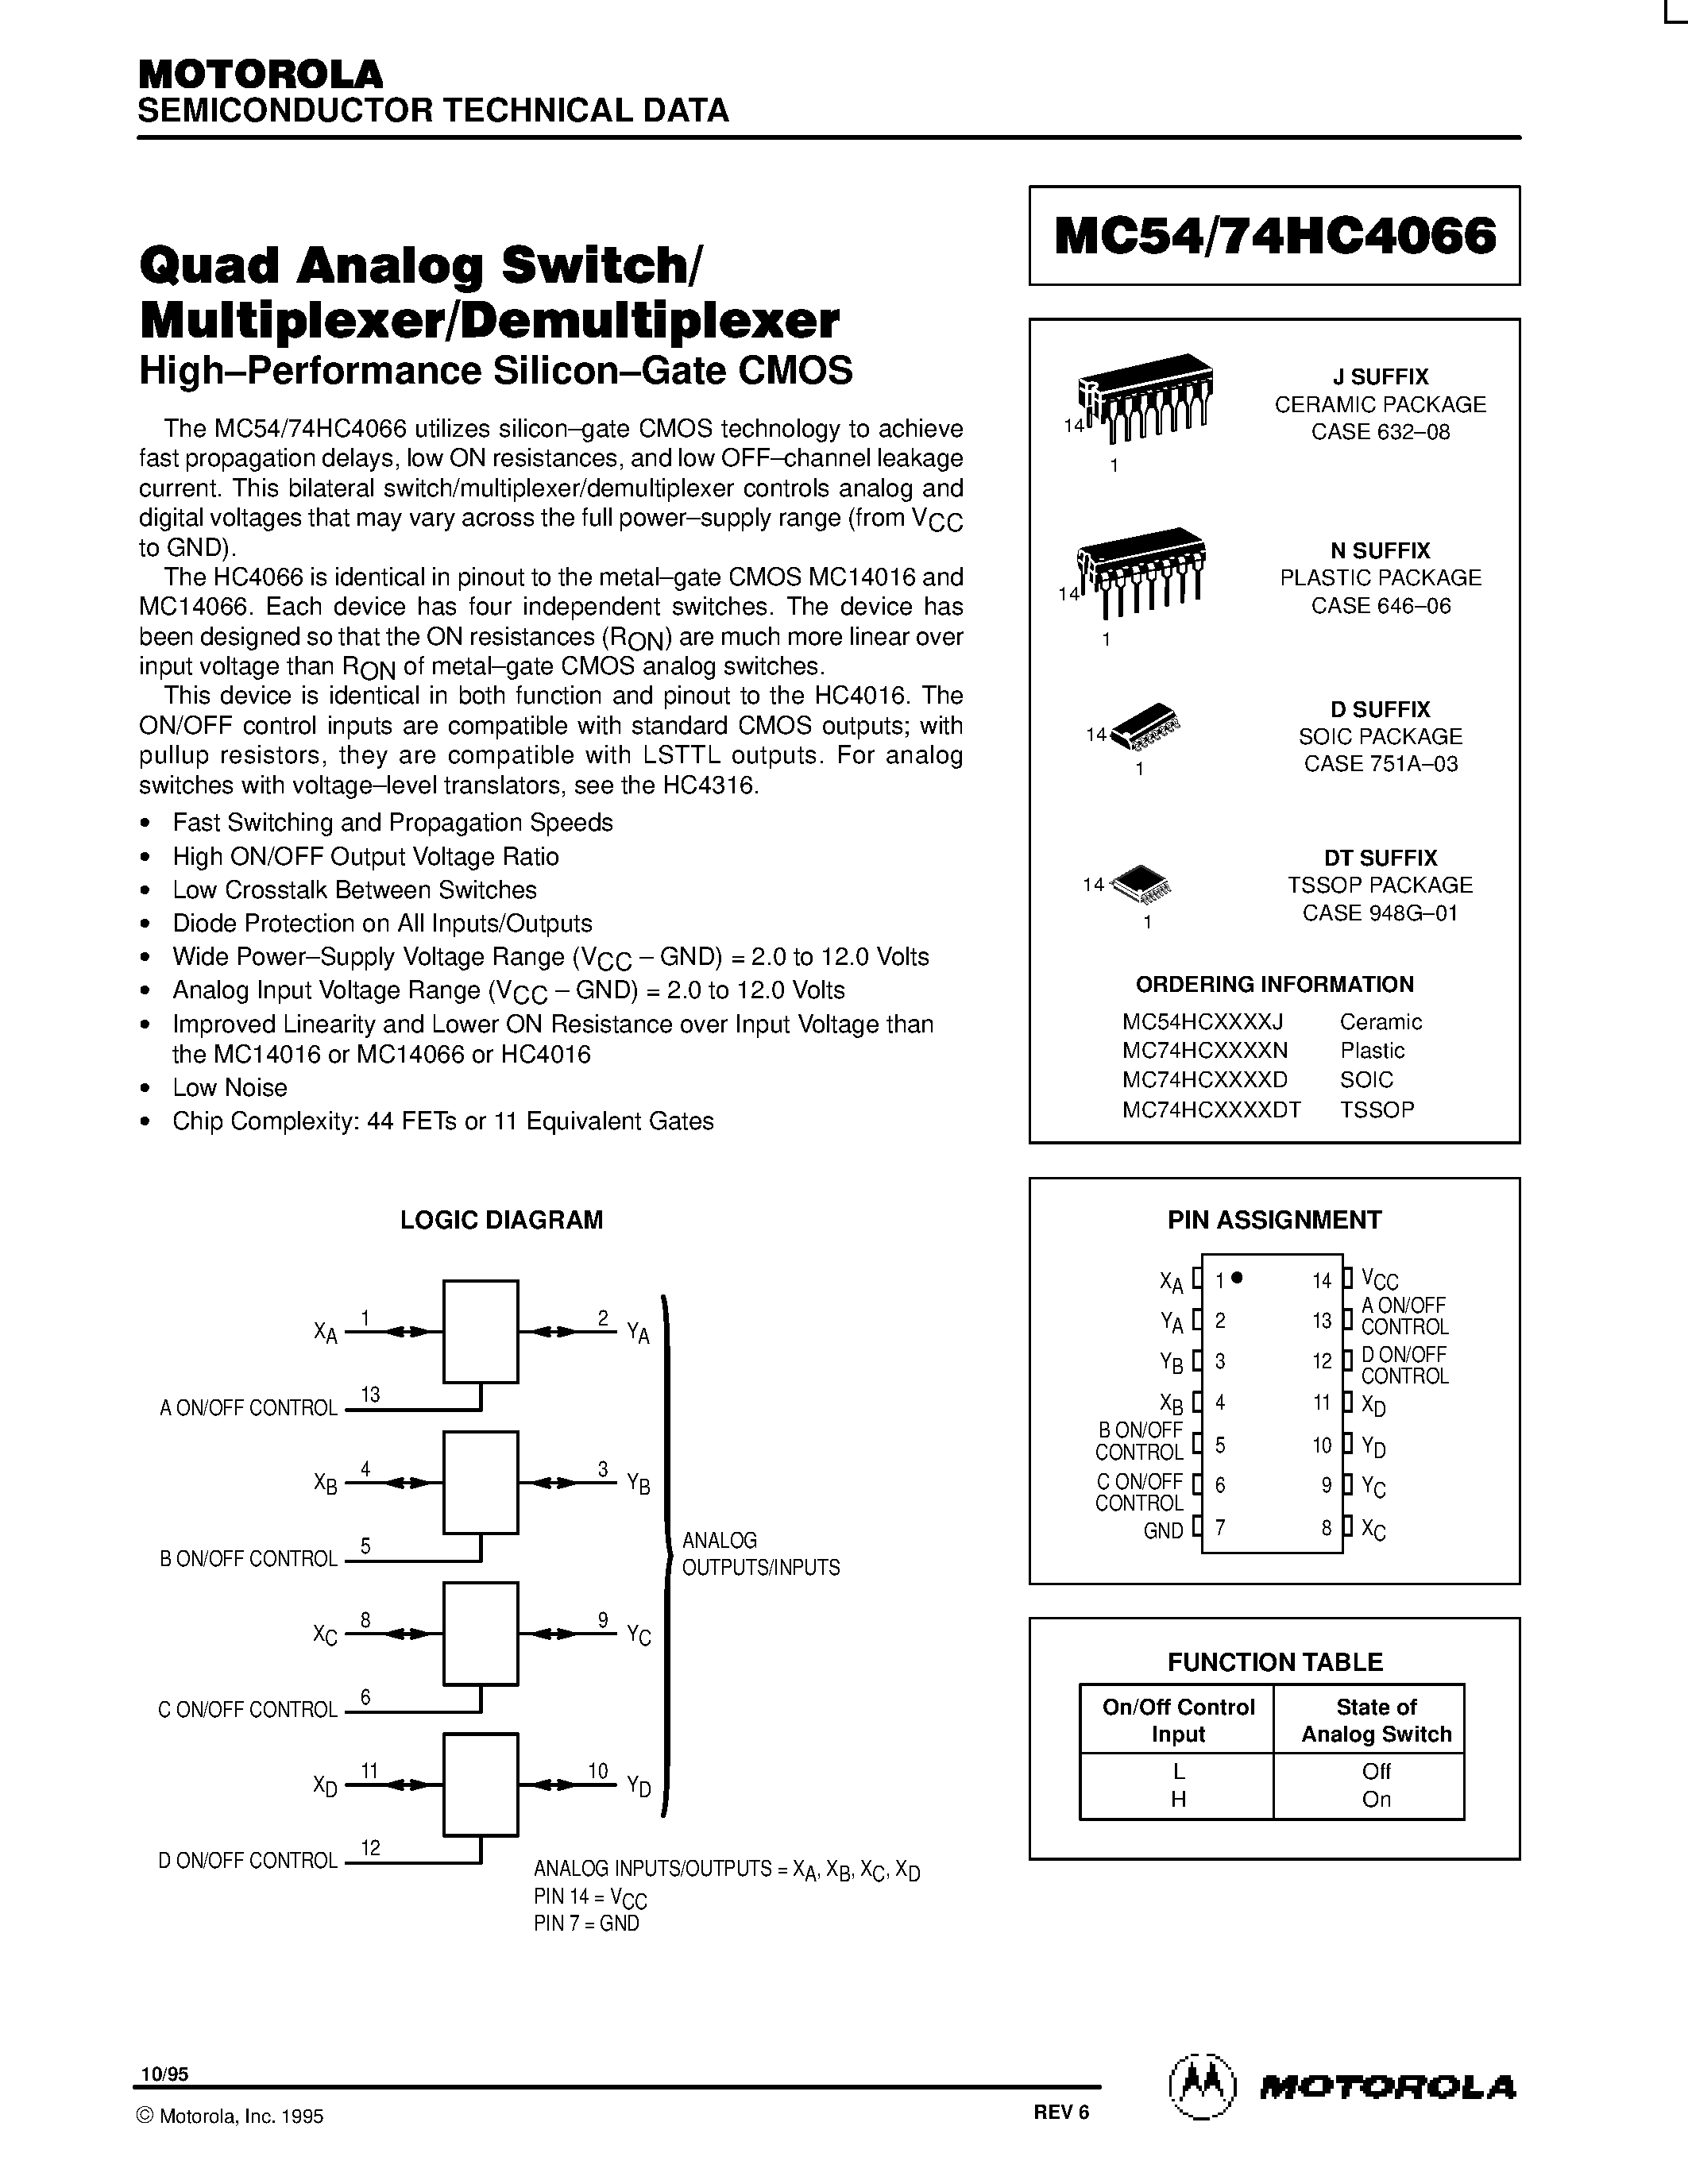 Datasheet 4066 - Quad Analog Switch/Multiplexer/Demultiplexer page 1